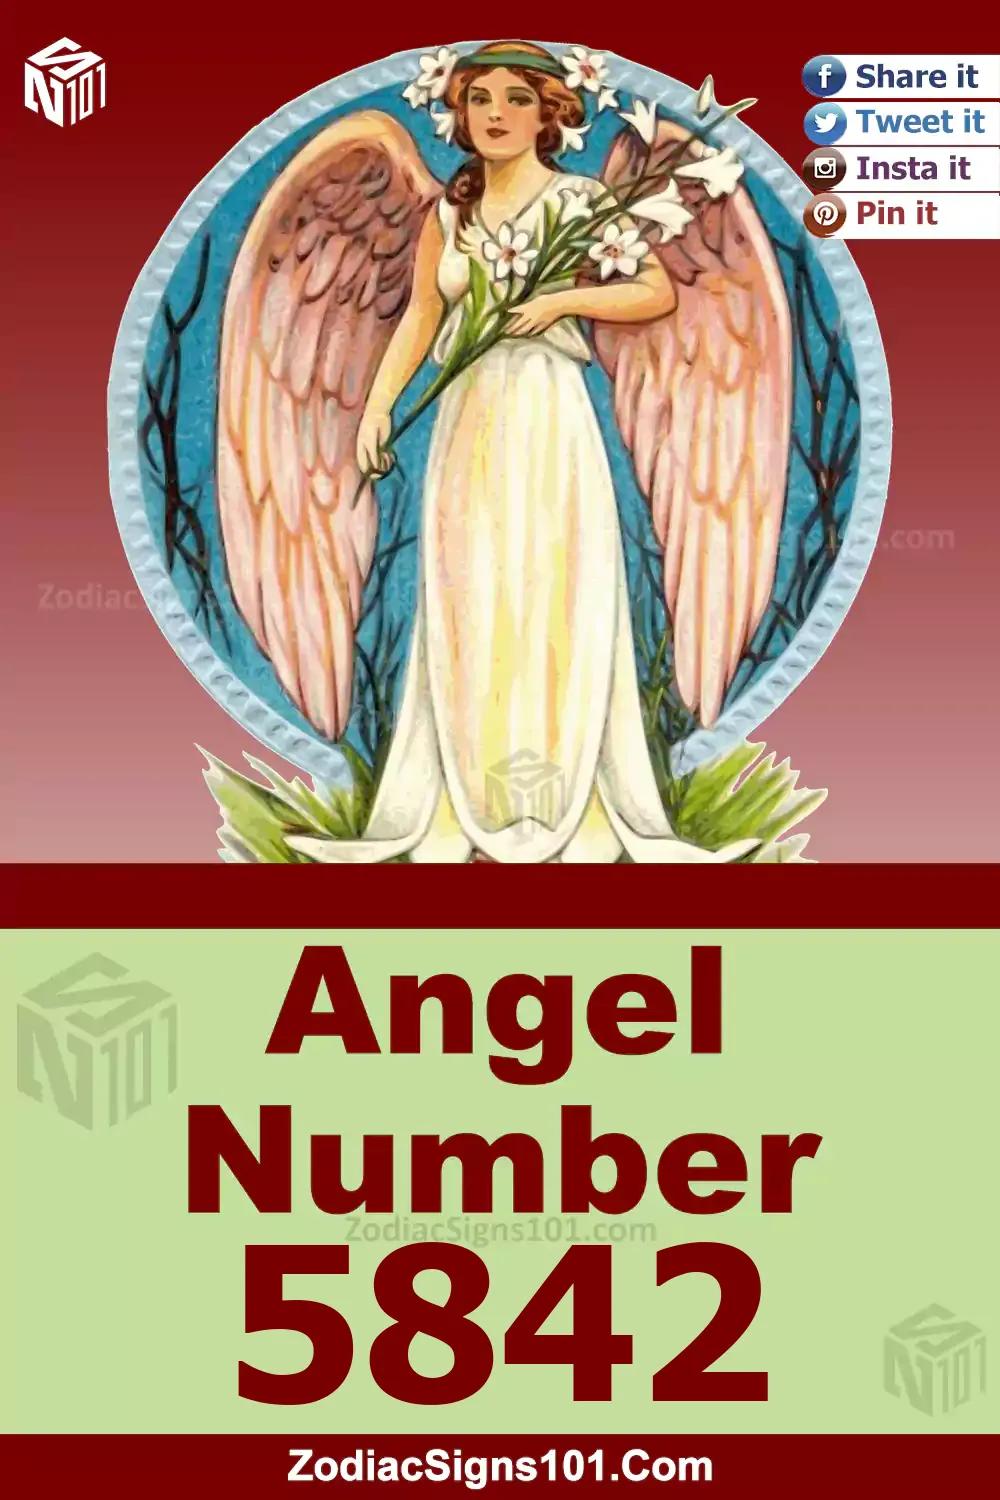 5842-Angel-Number-Meaning.jpg